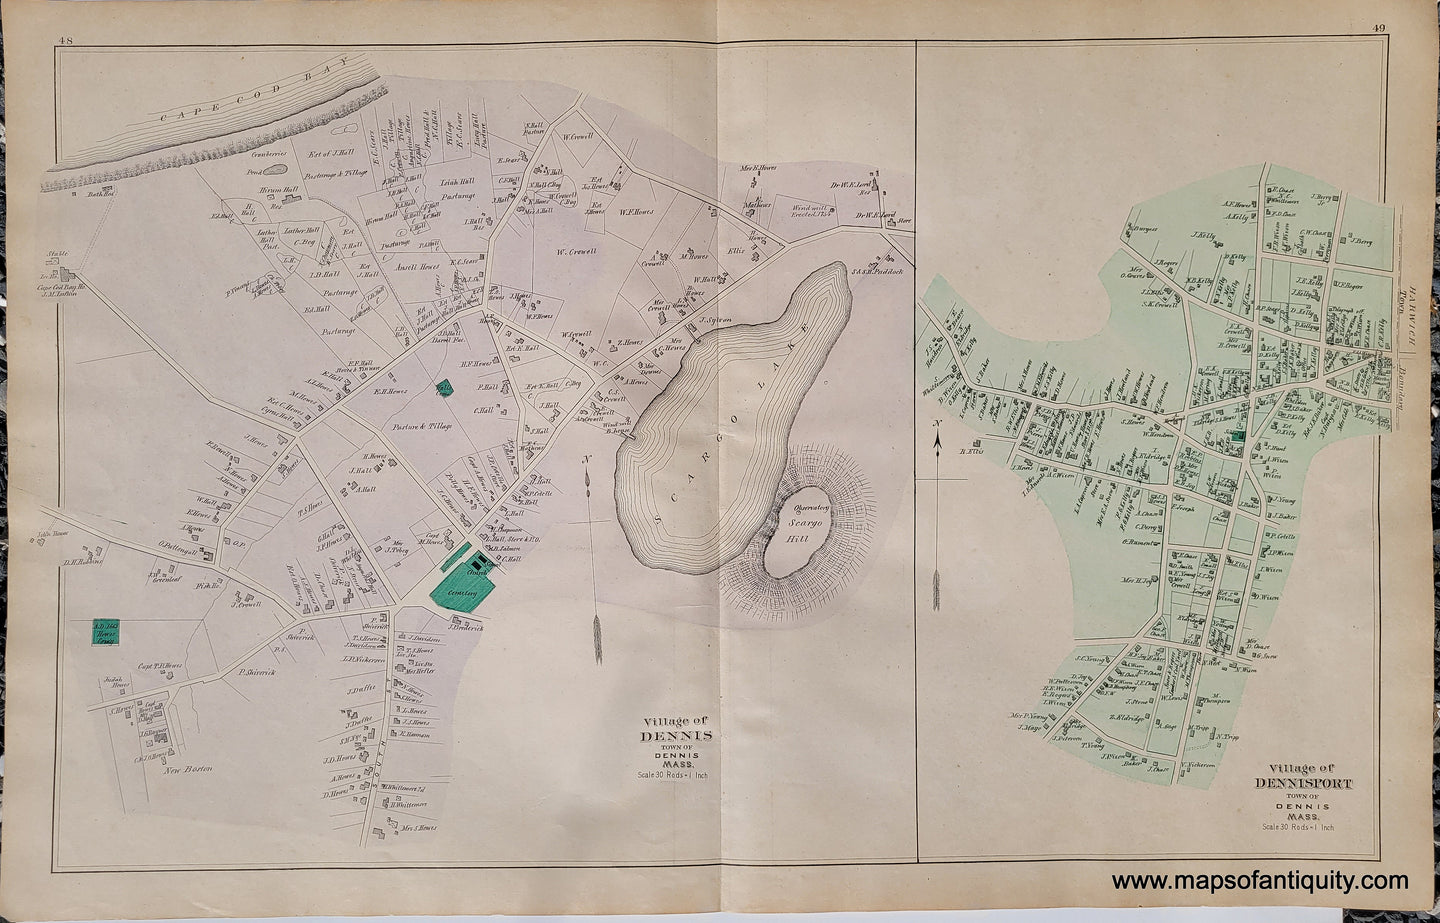 Antique-Hand-Colored-Map-Village-of-Dennis-Dennisport-pp.-48-49-US-Massachusetts-Cape-Cod-and-Islands-1880-Walker-Maps-Of-Antiquity